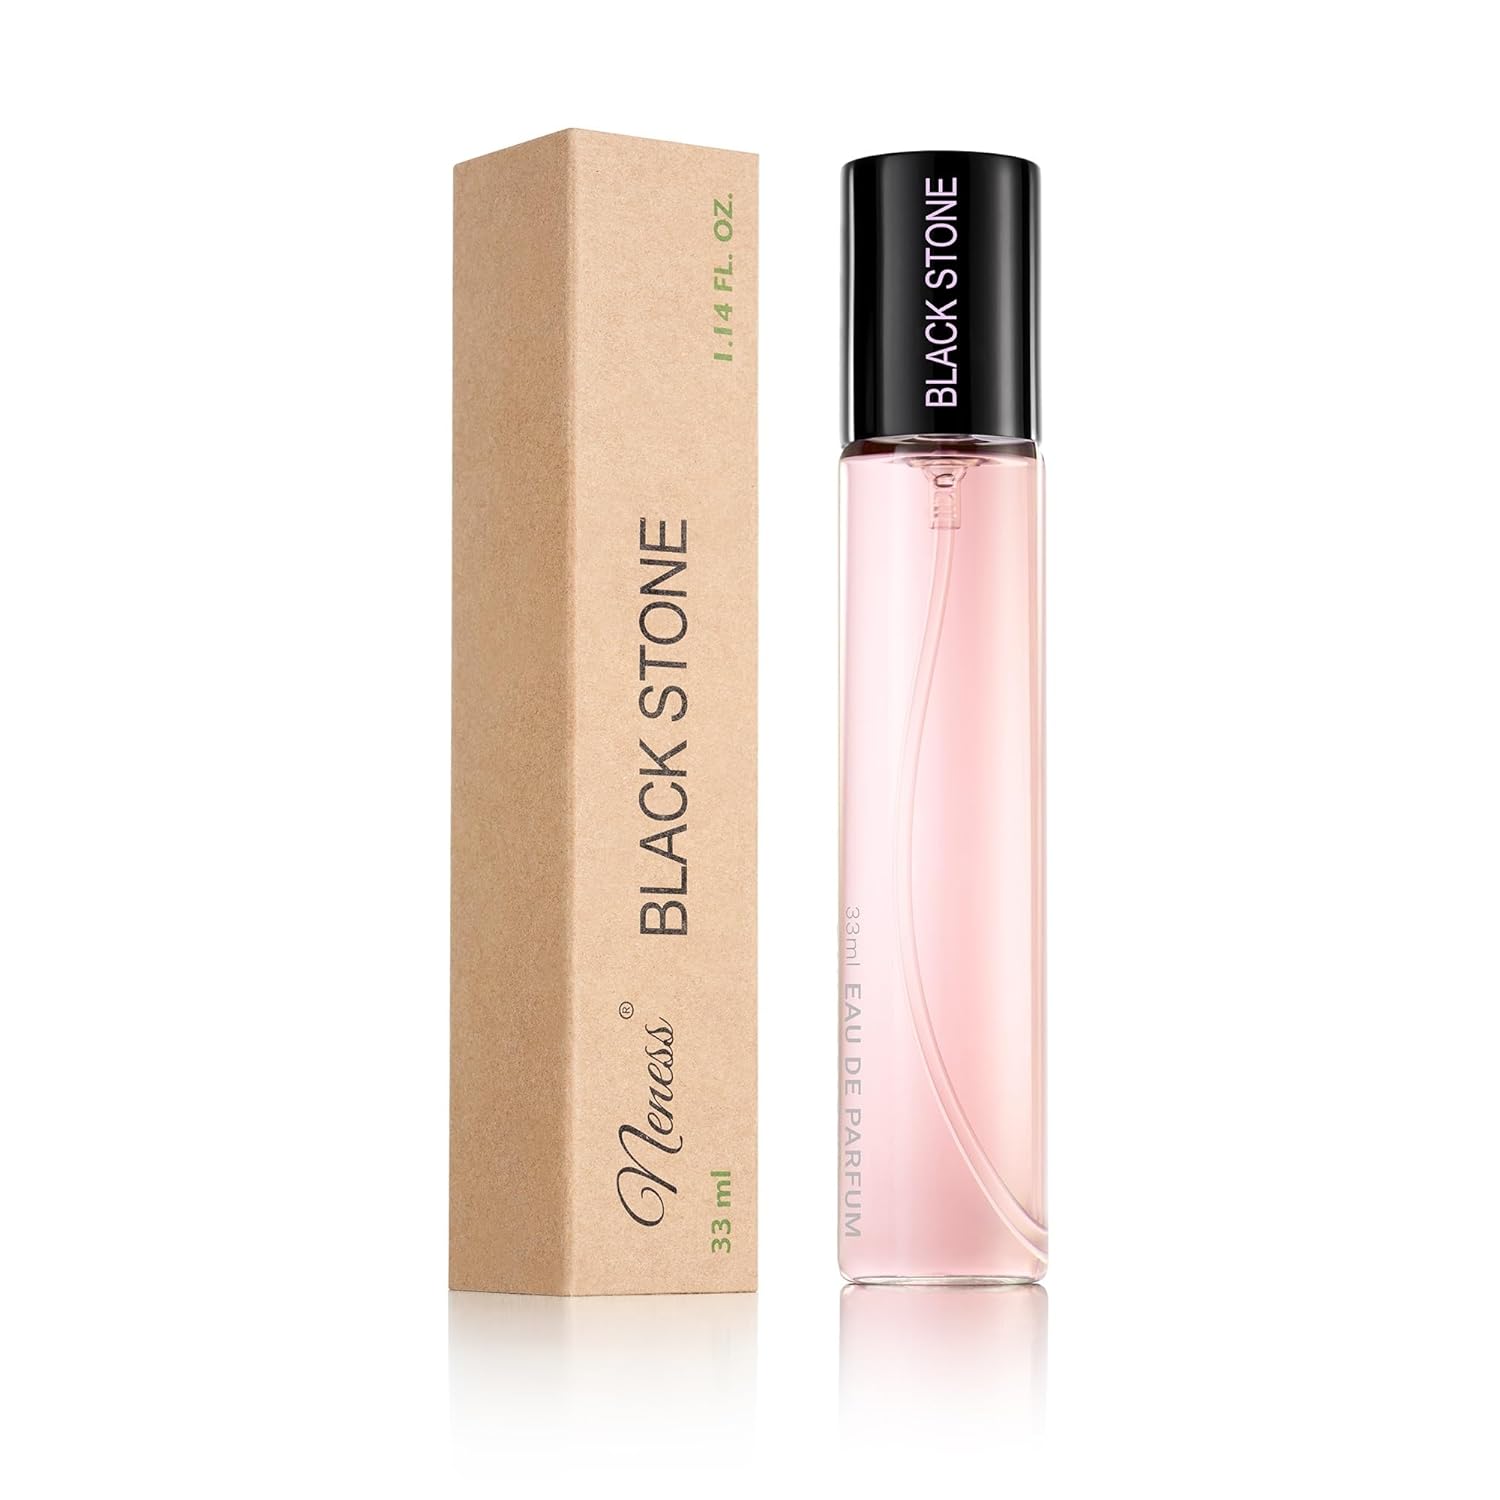 Neness Black Opal Women\'s Perfume, Eau de Parfum, Bold and Feminine Fragrance for Any Occasion, 33 ml